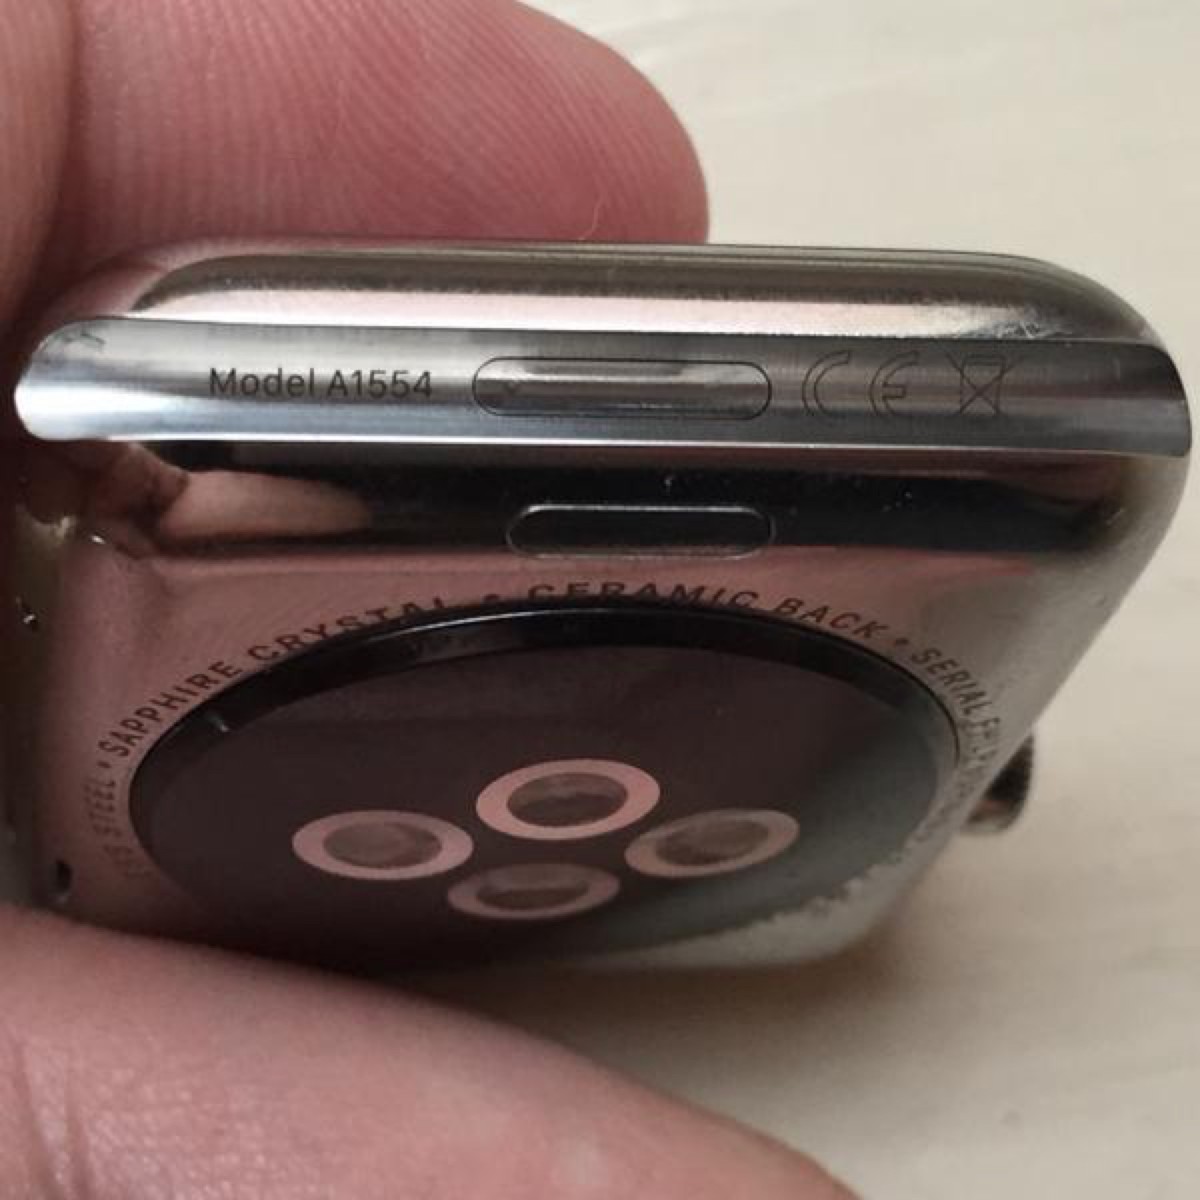 Apple Watch Still Shows "hidden" Port on The Units Apple Store